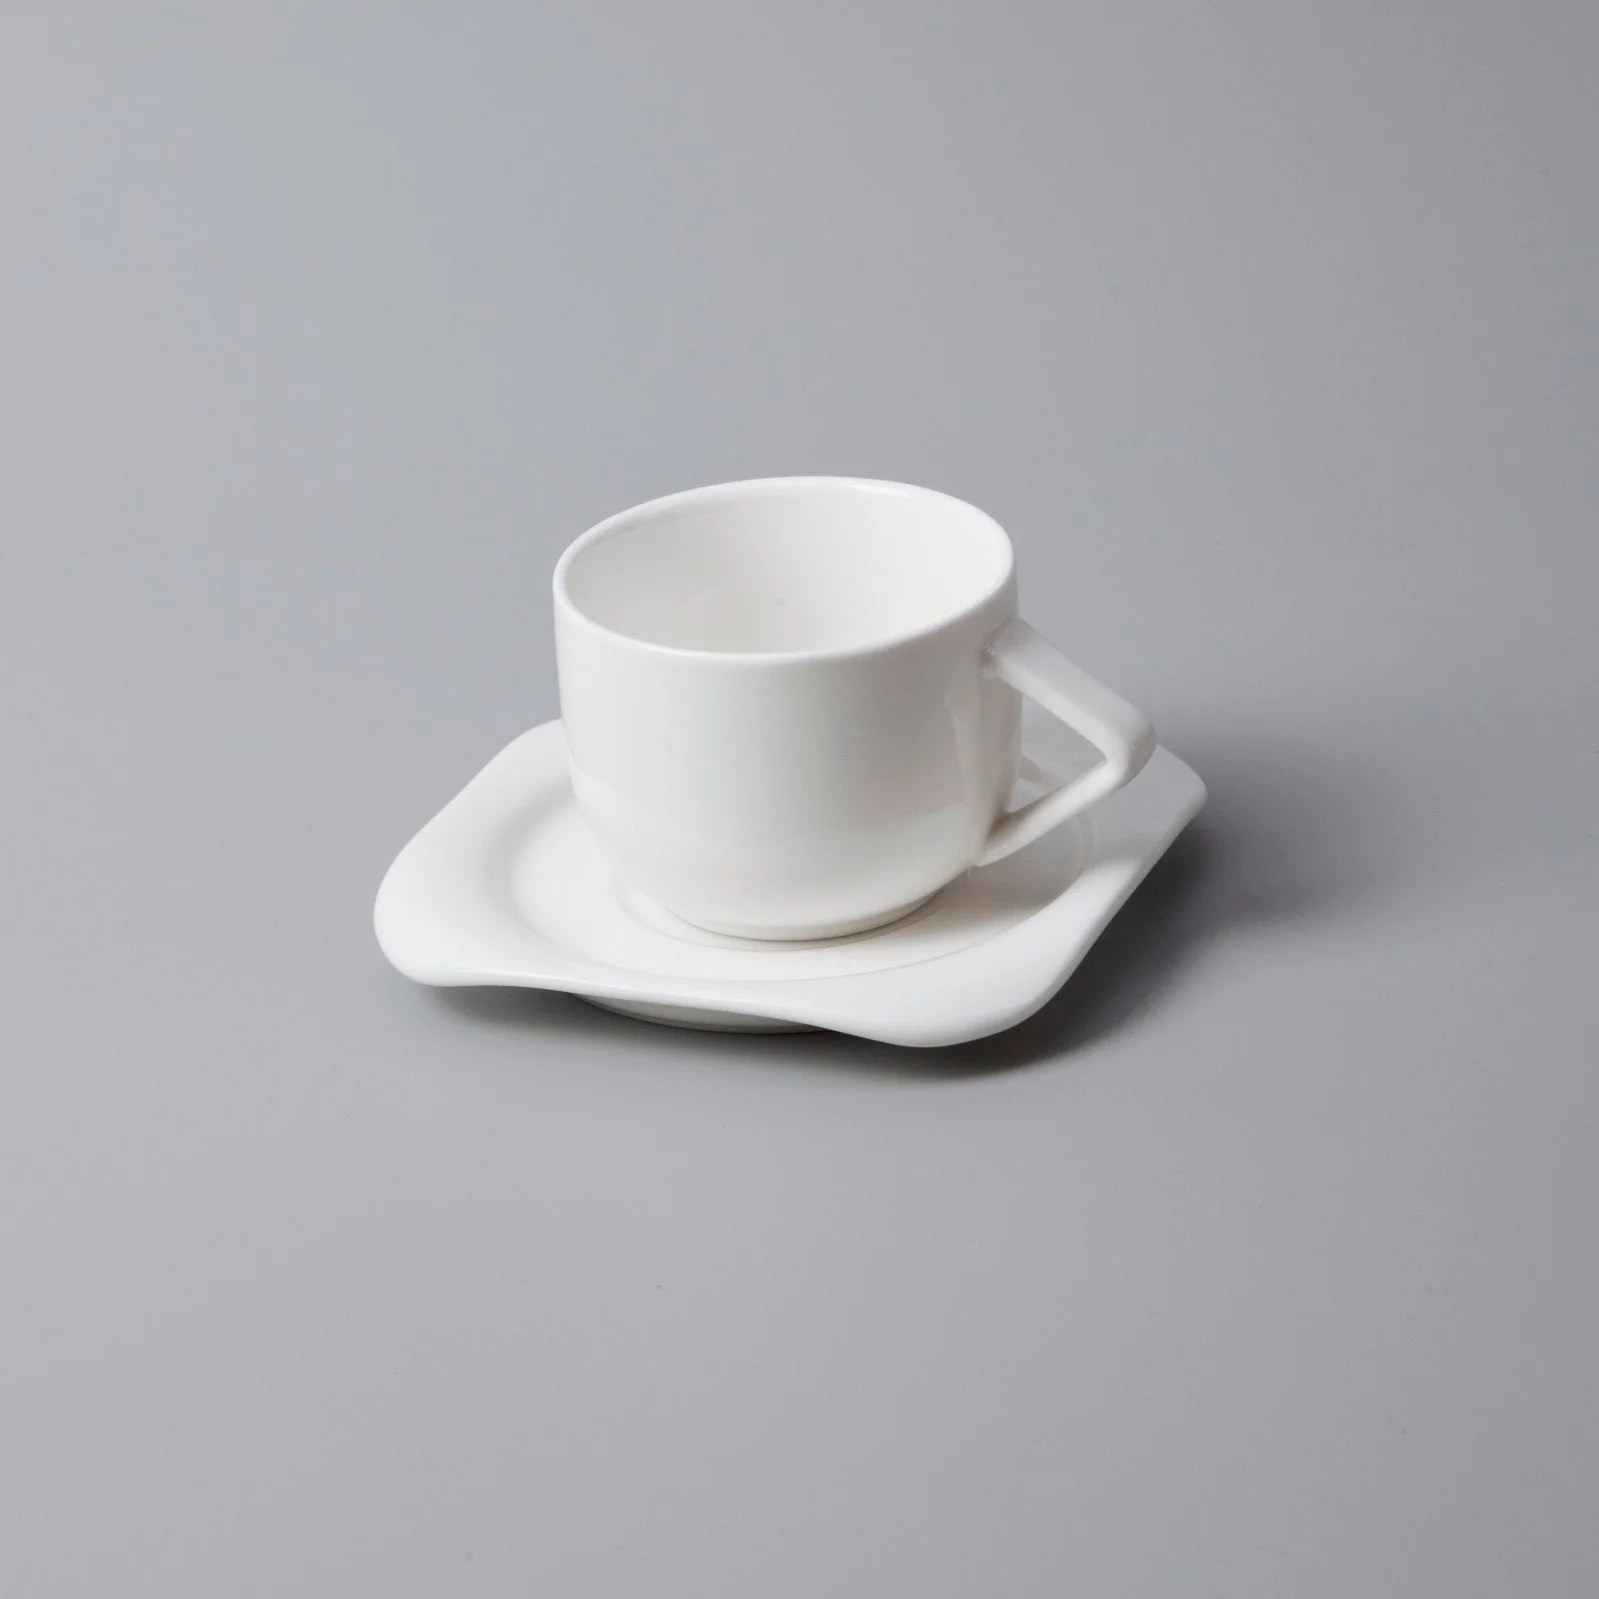 white porcelain tableware smooth Bulk Buy hotel Two Eight